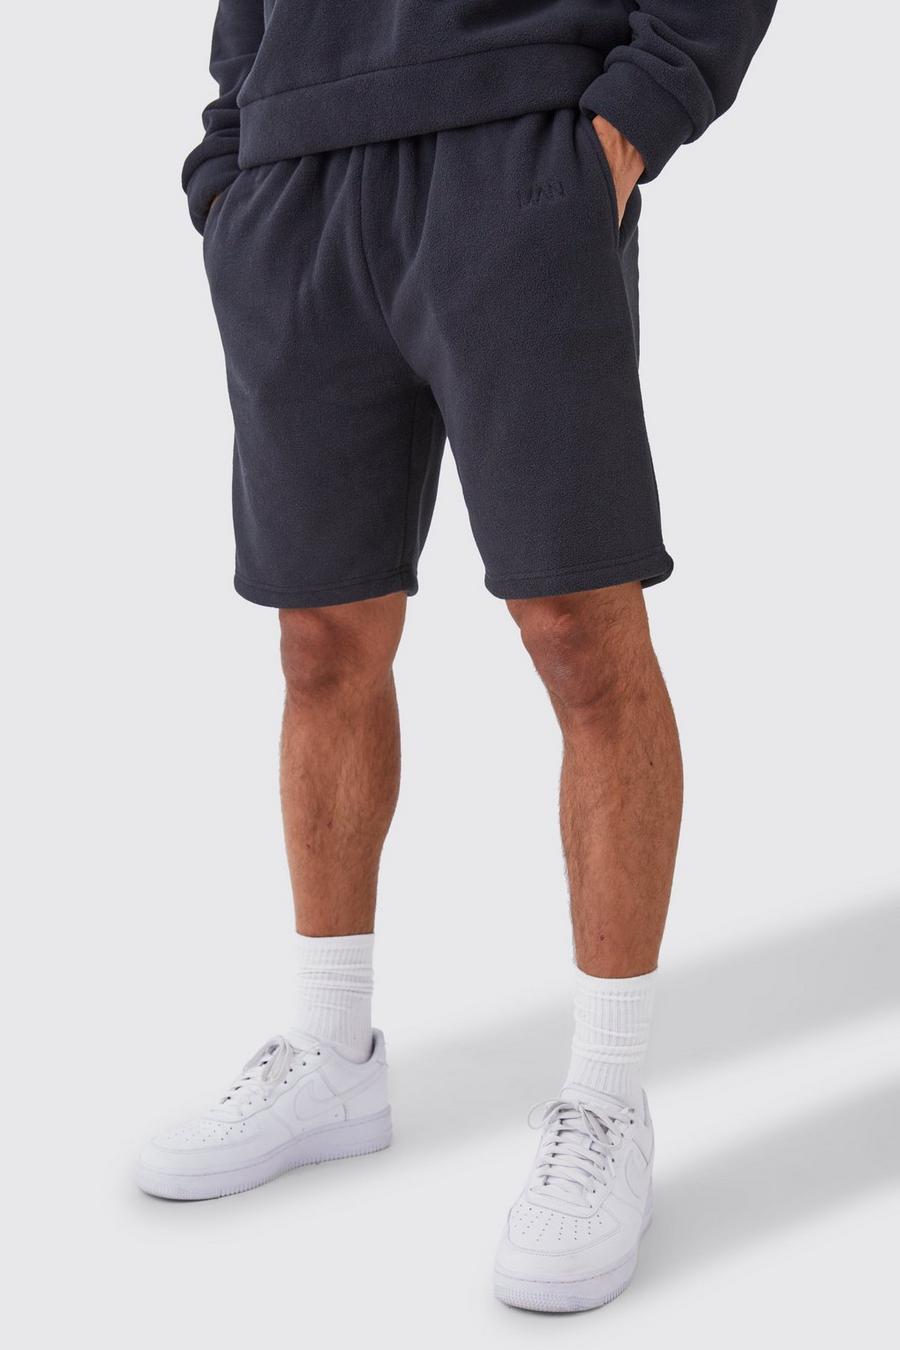 Lockere mittellange Microfleece-Shorts, Black